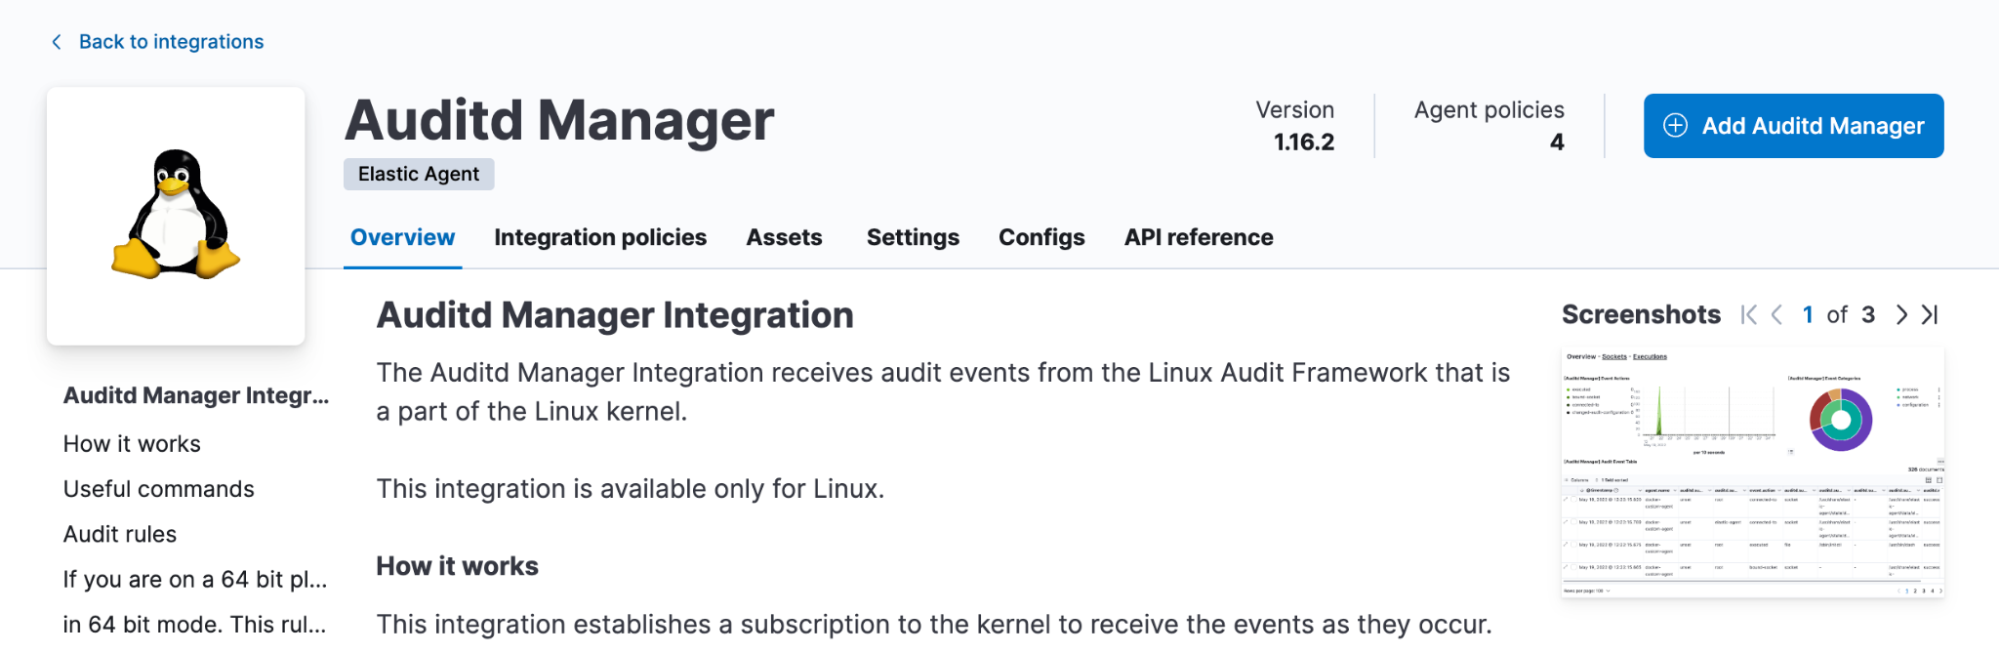 Auditd Manager integration in Elastic